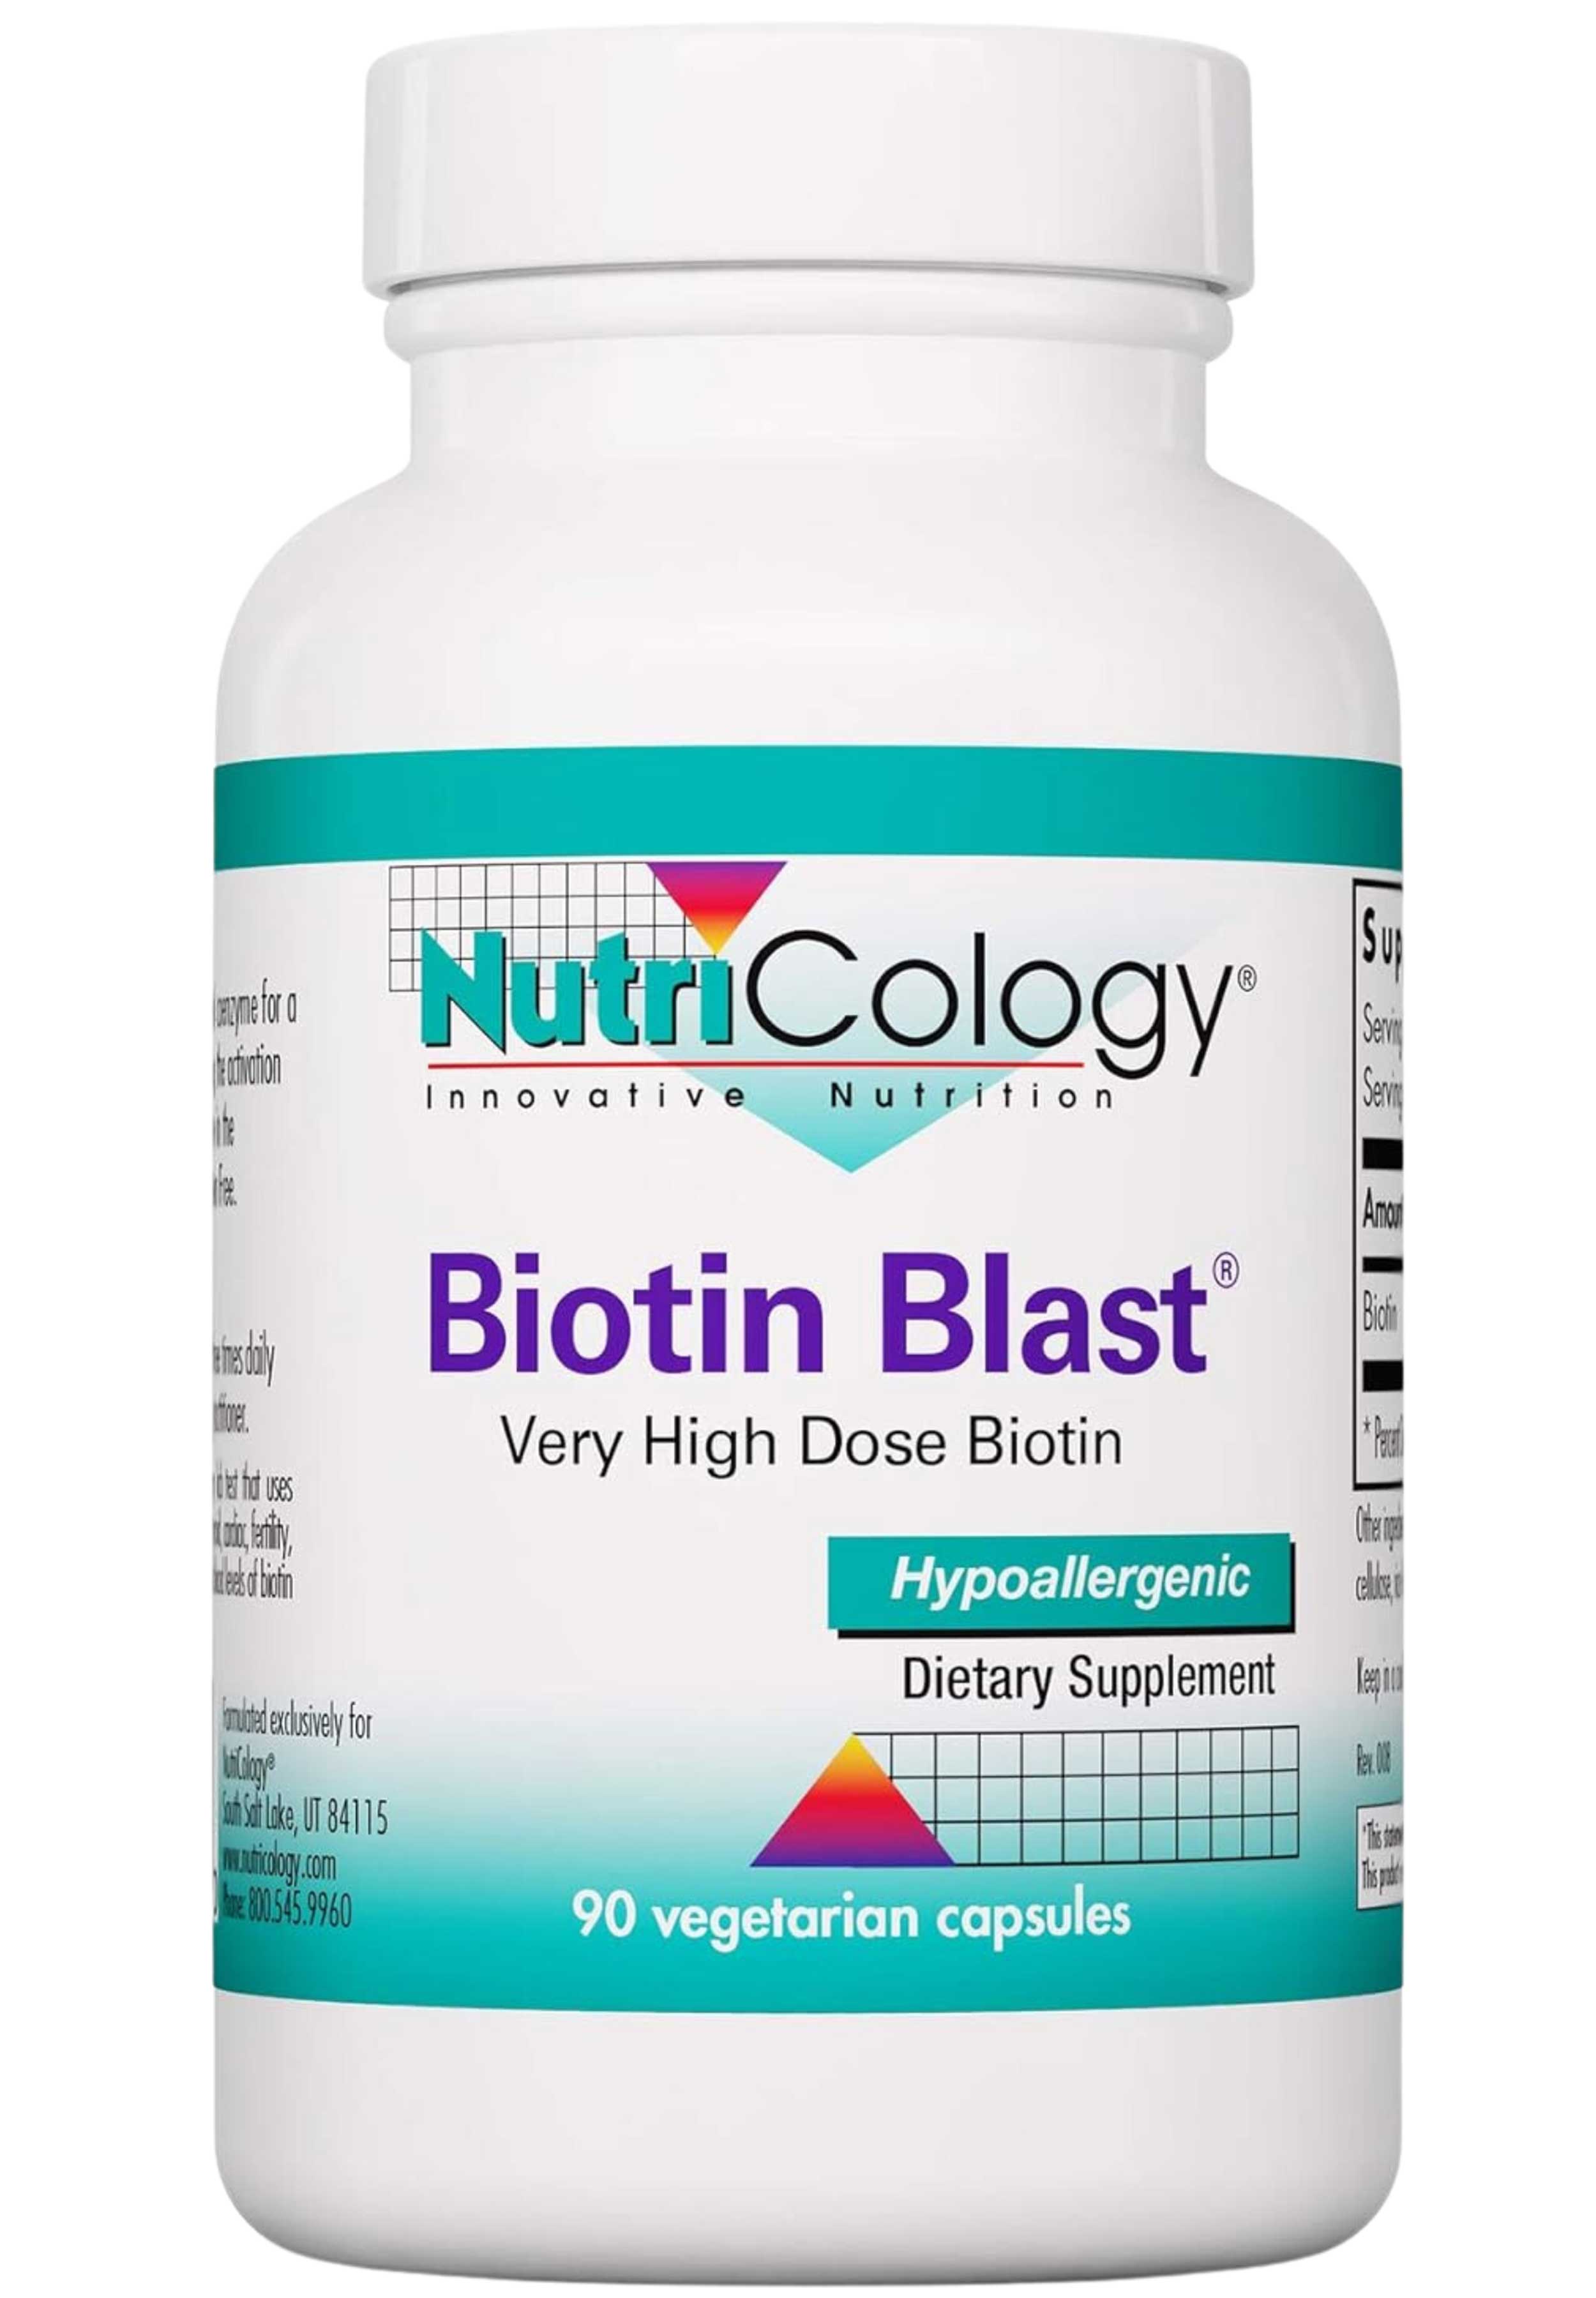 Nutricology Biotin Blast